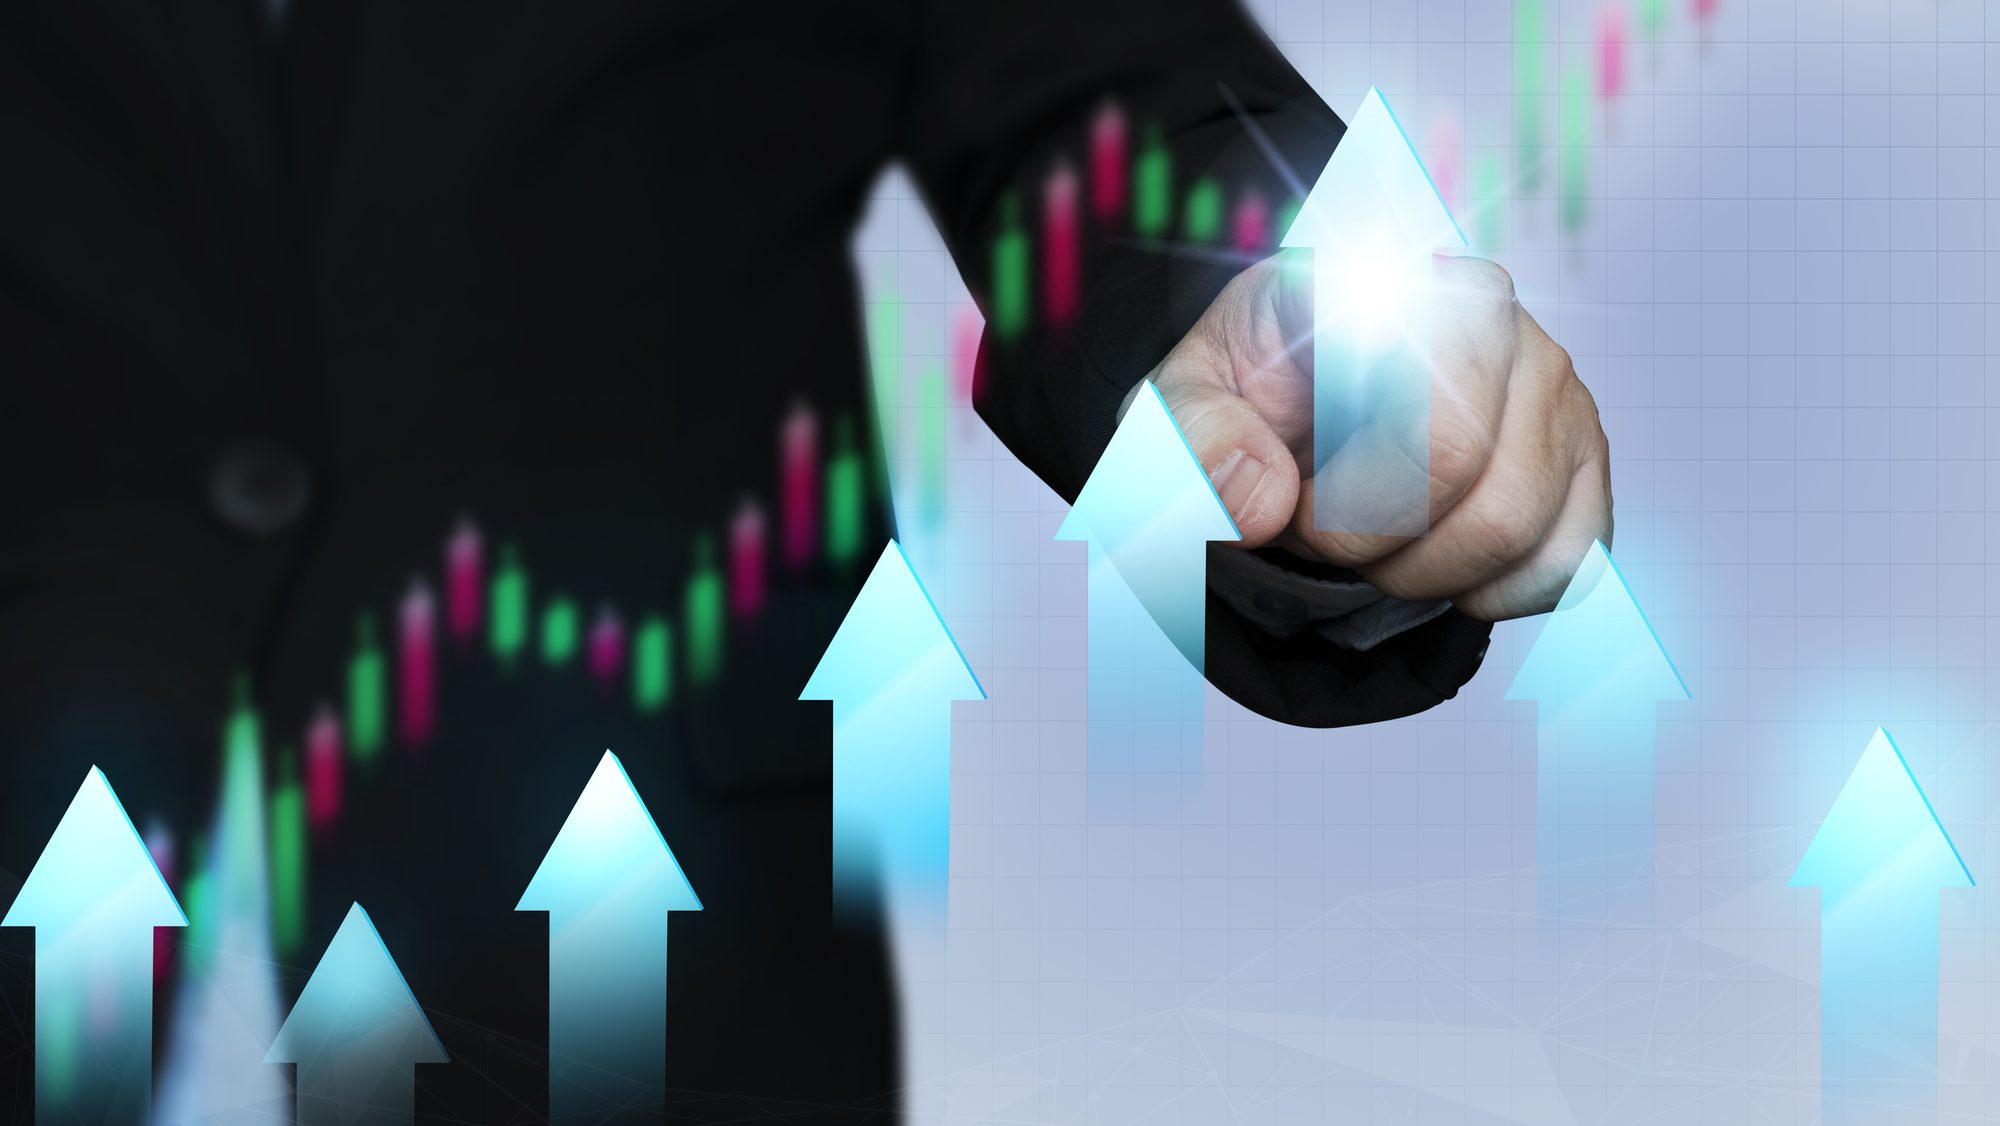 Businessman pointing an upward arrow on a stock graph.